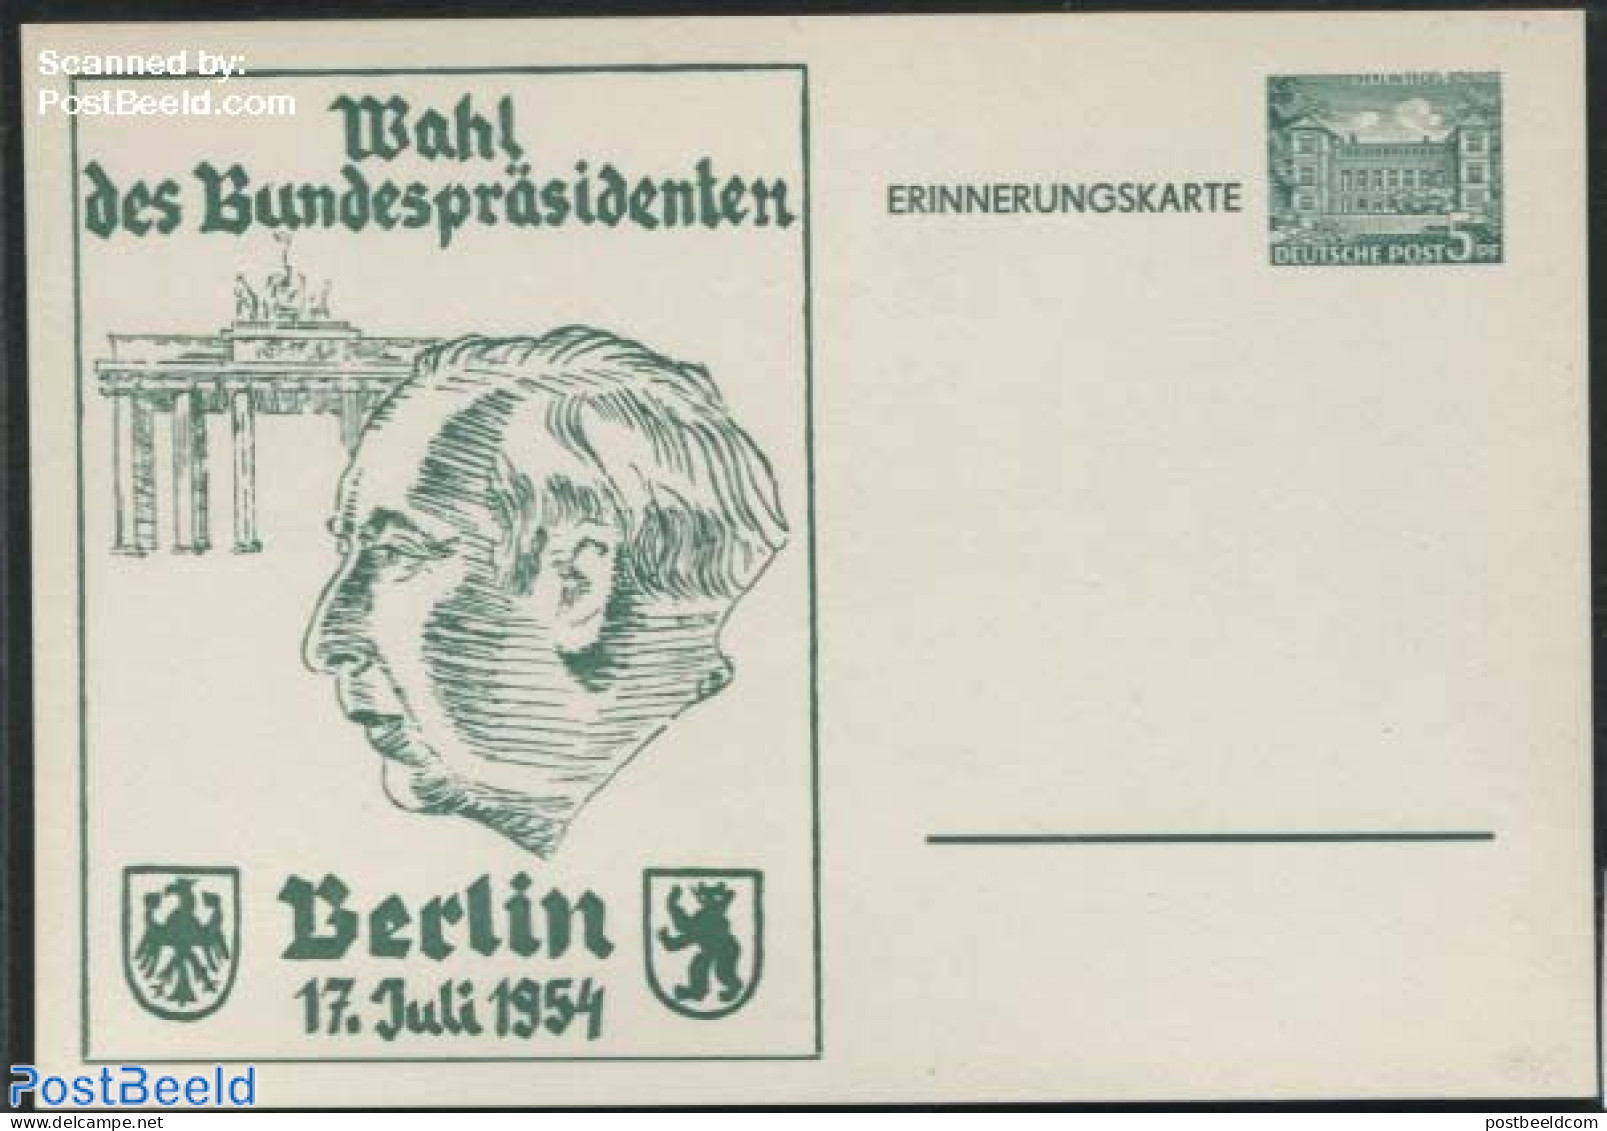 Germany, Berlin 1954 Postcard 5pf, Presidential Elections, Unused Postal Stationary - Briefe U. Dokumente